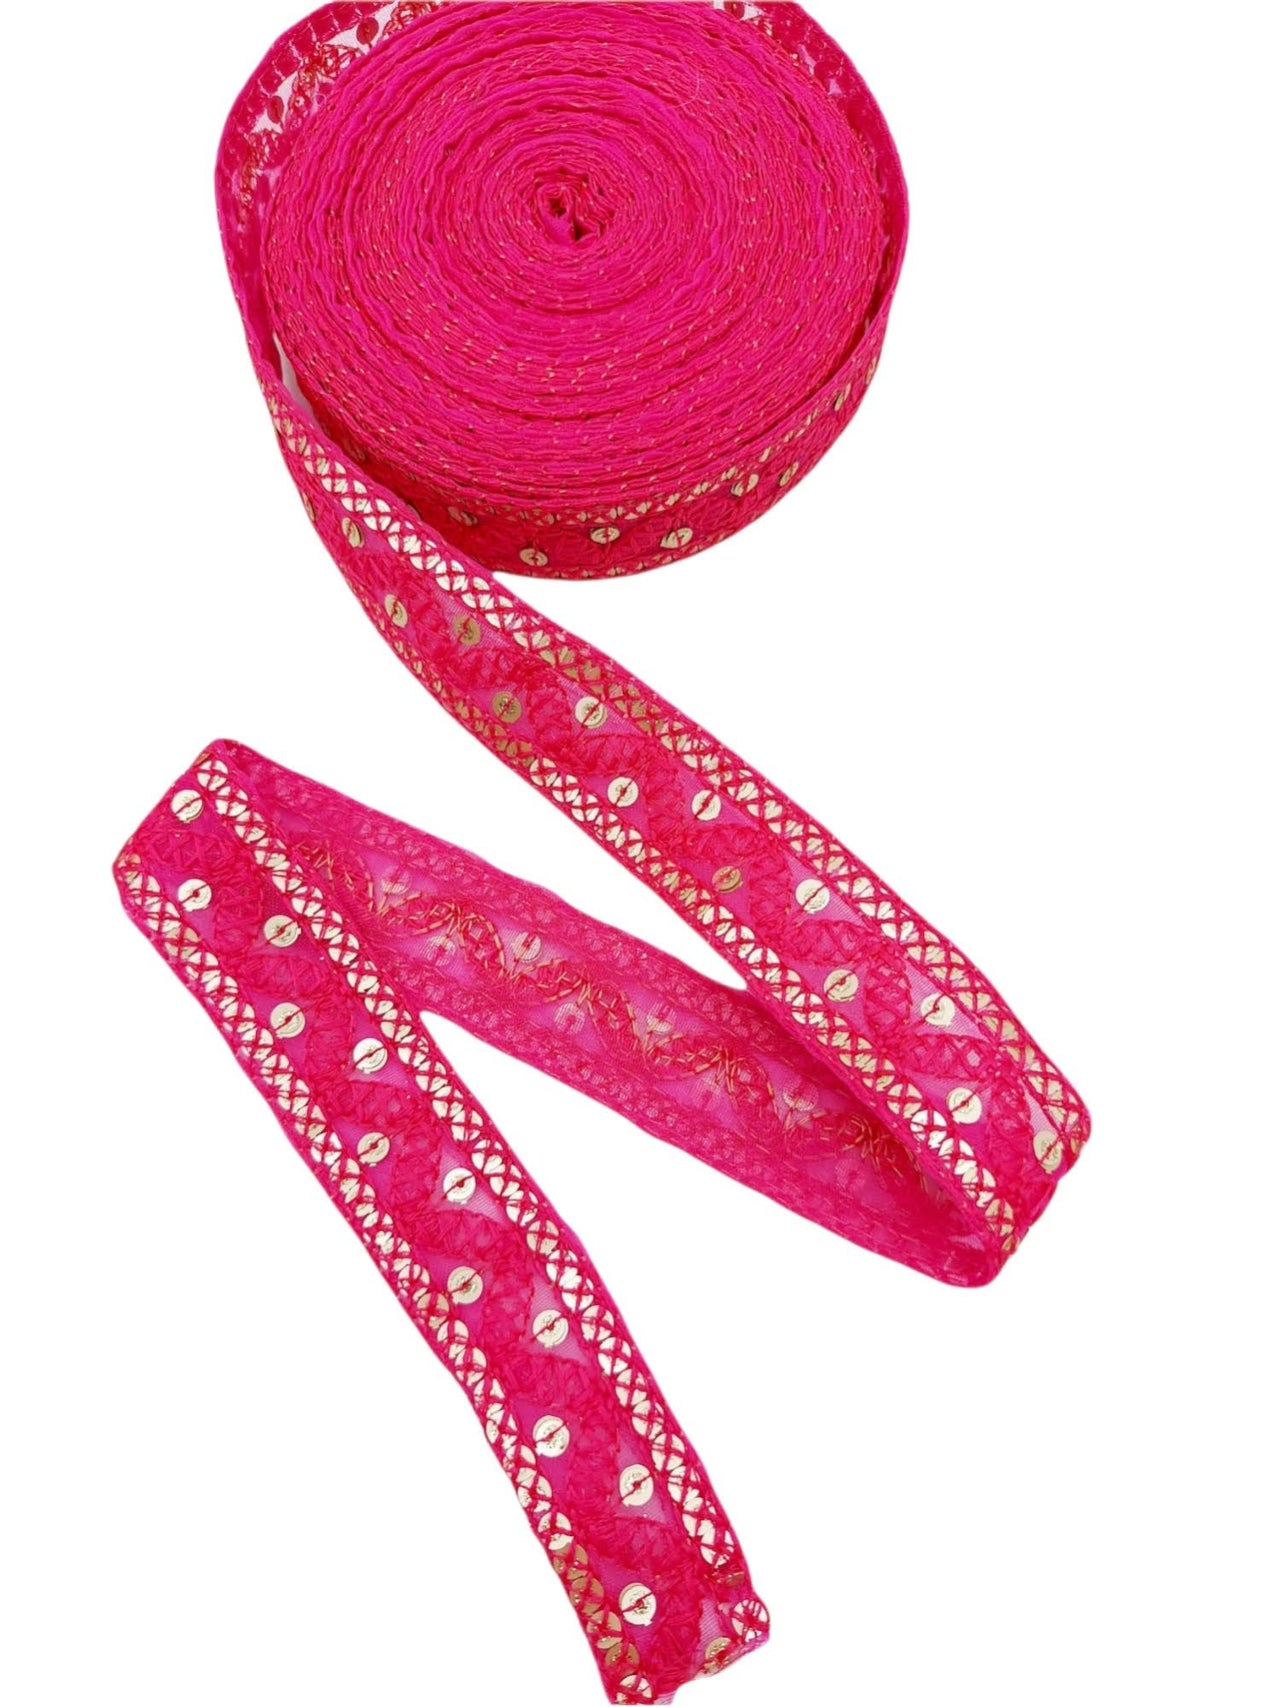 Embroidered Lace Trim Sequins Trim 3 Yards Decorative Sari Border Costume Ribbon Crafting Sewing Tape